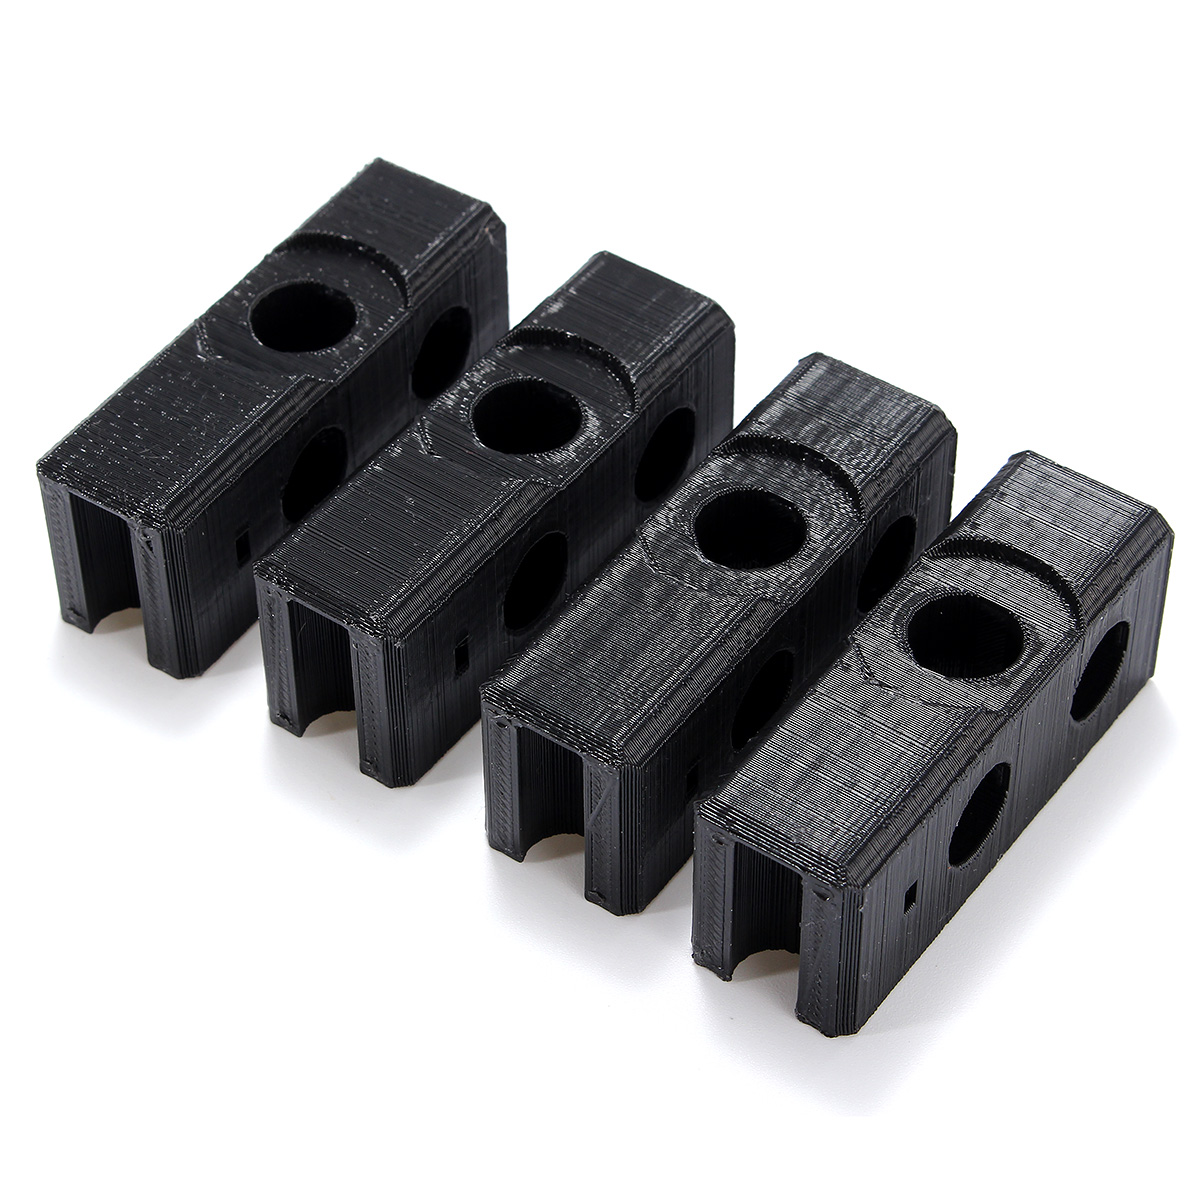 Black-ABS-Filament-Black-3D-Printed-Accessories-Parts-DIY-Kit-For-RepRap-Prusa-i3-3D-Printer-1187085-3